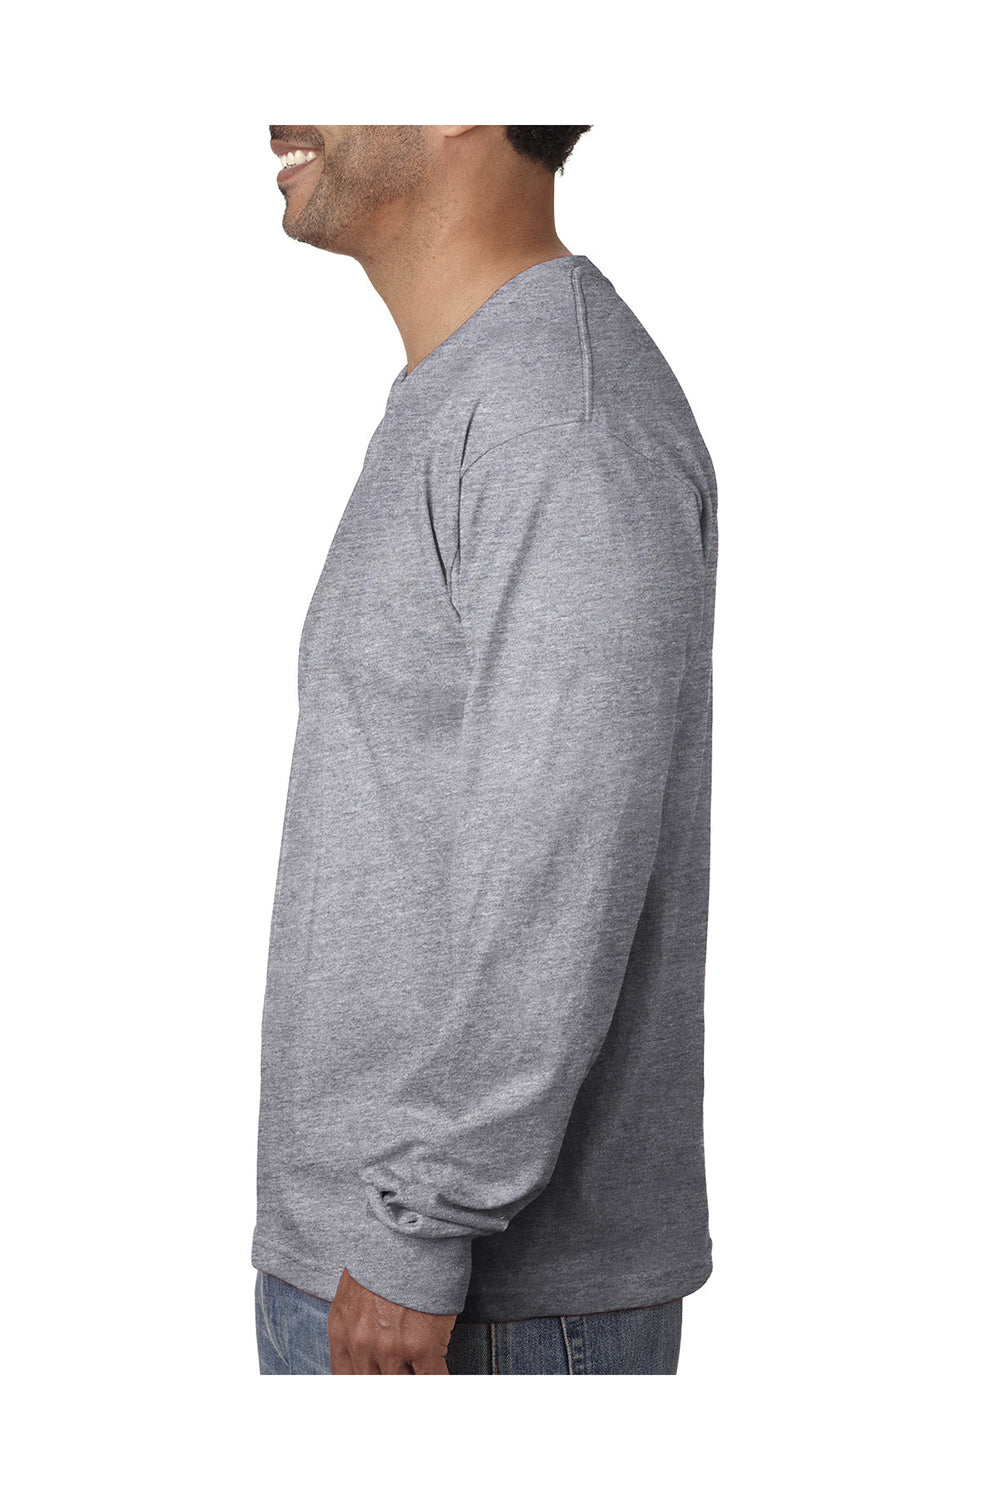 Bayside BA5060 Mens USA Made Long Sleeve Crewneck T-Shirt Dark Ash Grey Model Side